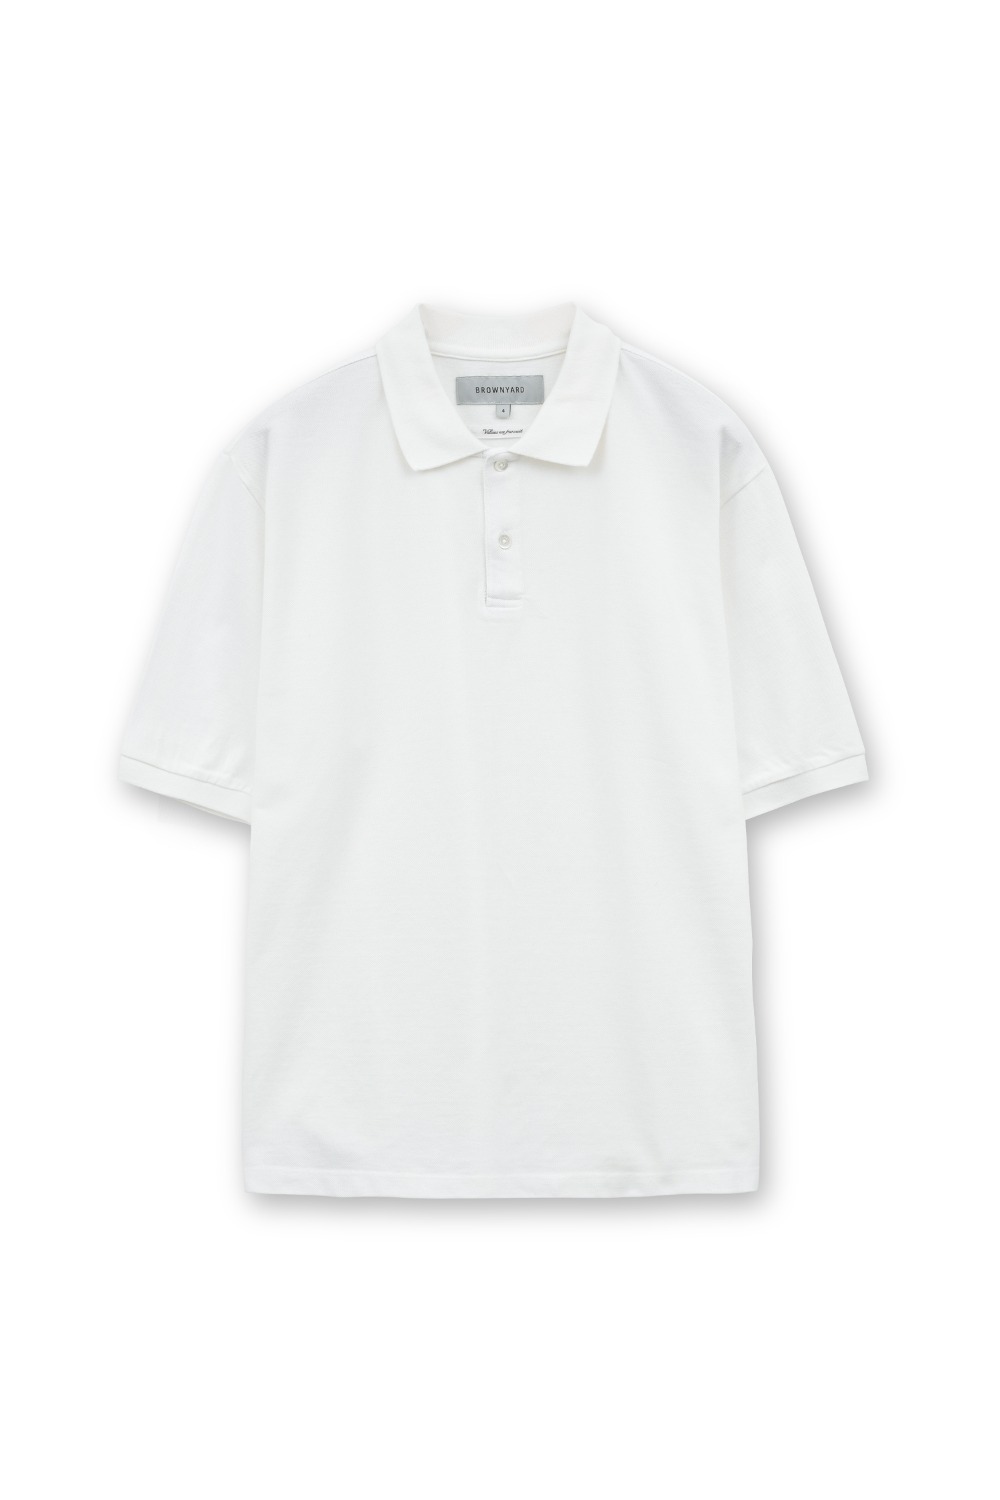 Cotton Pique Shirt-White